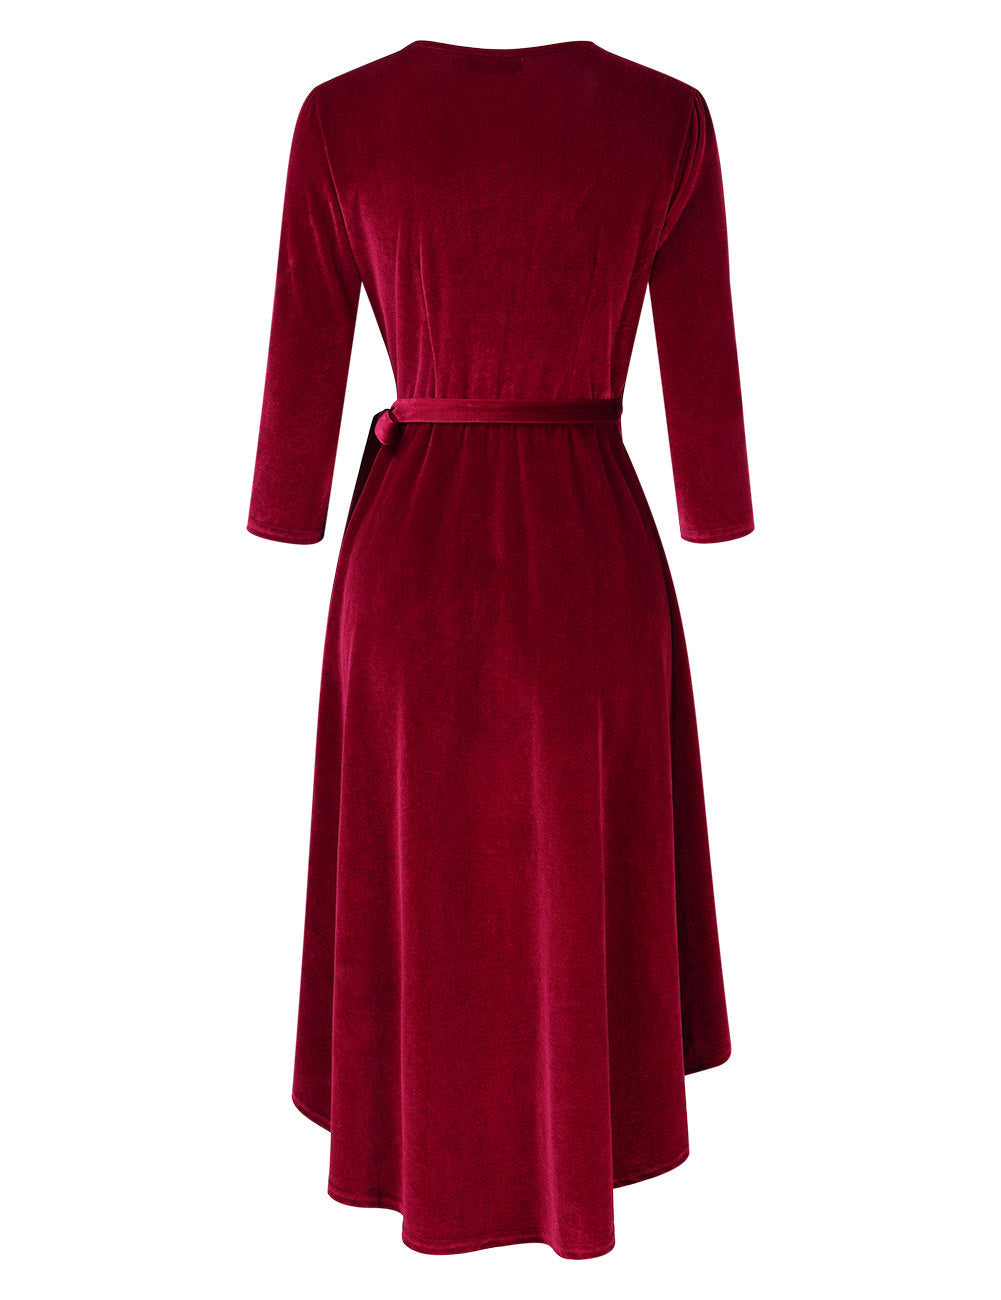 YESFASHION Women's Velvet V-Neck Long Sleeve Casual Party Dress Red